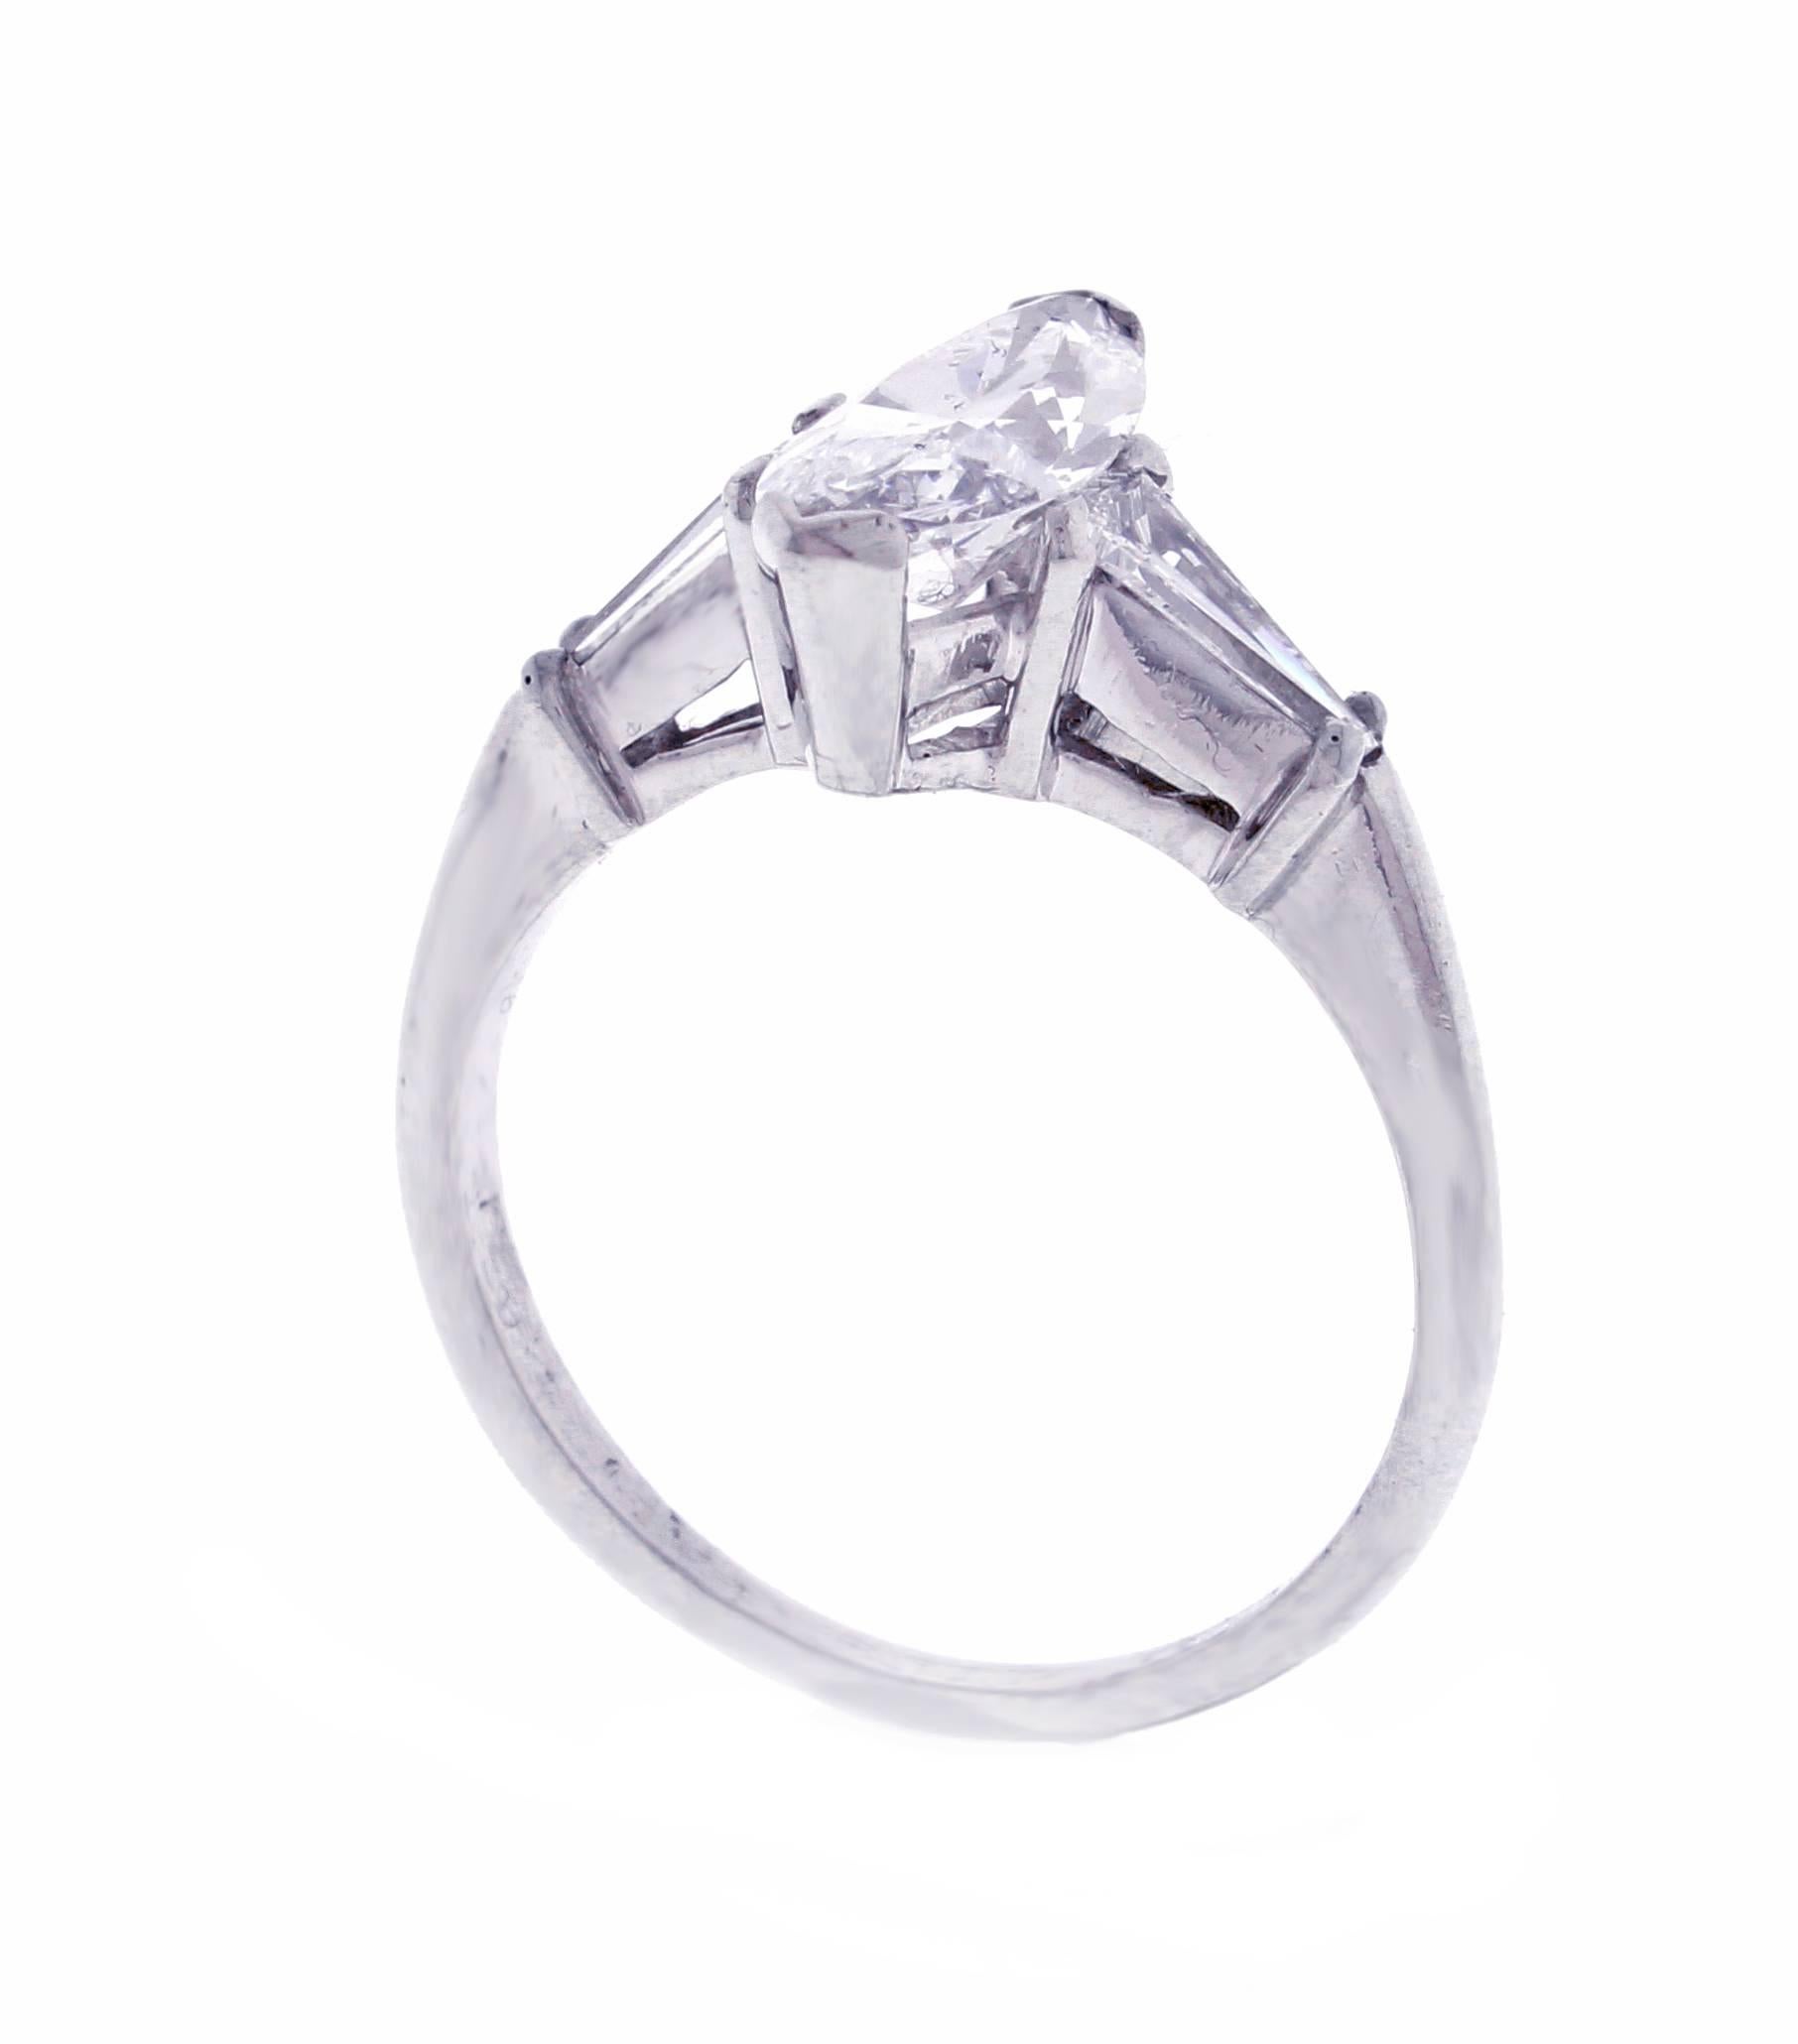 Marquise Cut 1.80 carat D-VS2 Marquise Diamond Ring